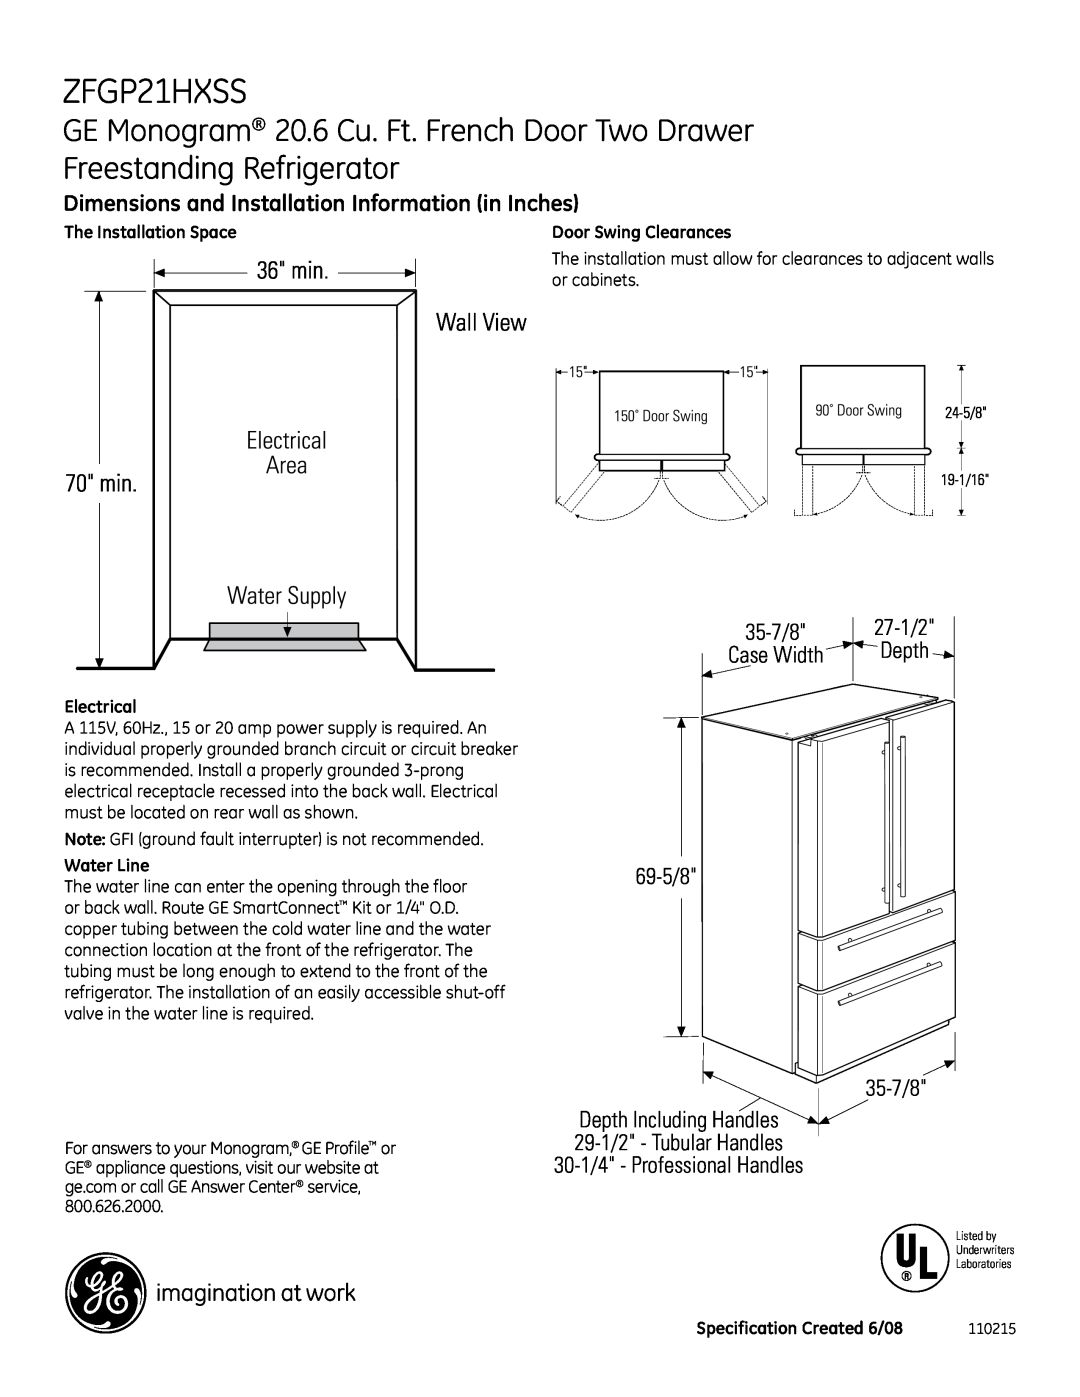 GE Monogram ZFGP21HXSS dimensions GE Monogram 20.6 Cu. Ft. French Door Two Drawer, Freestanding Refrigerator, 35-7/8 